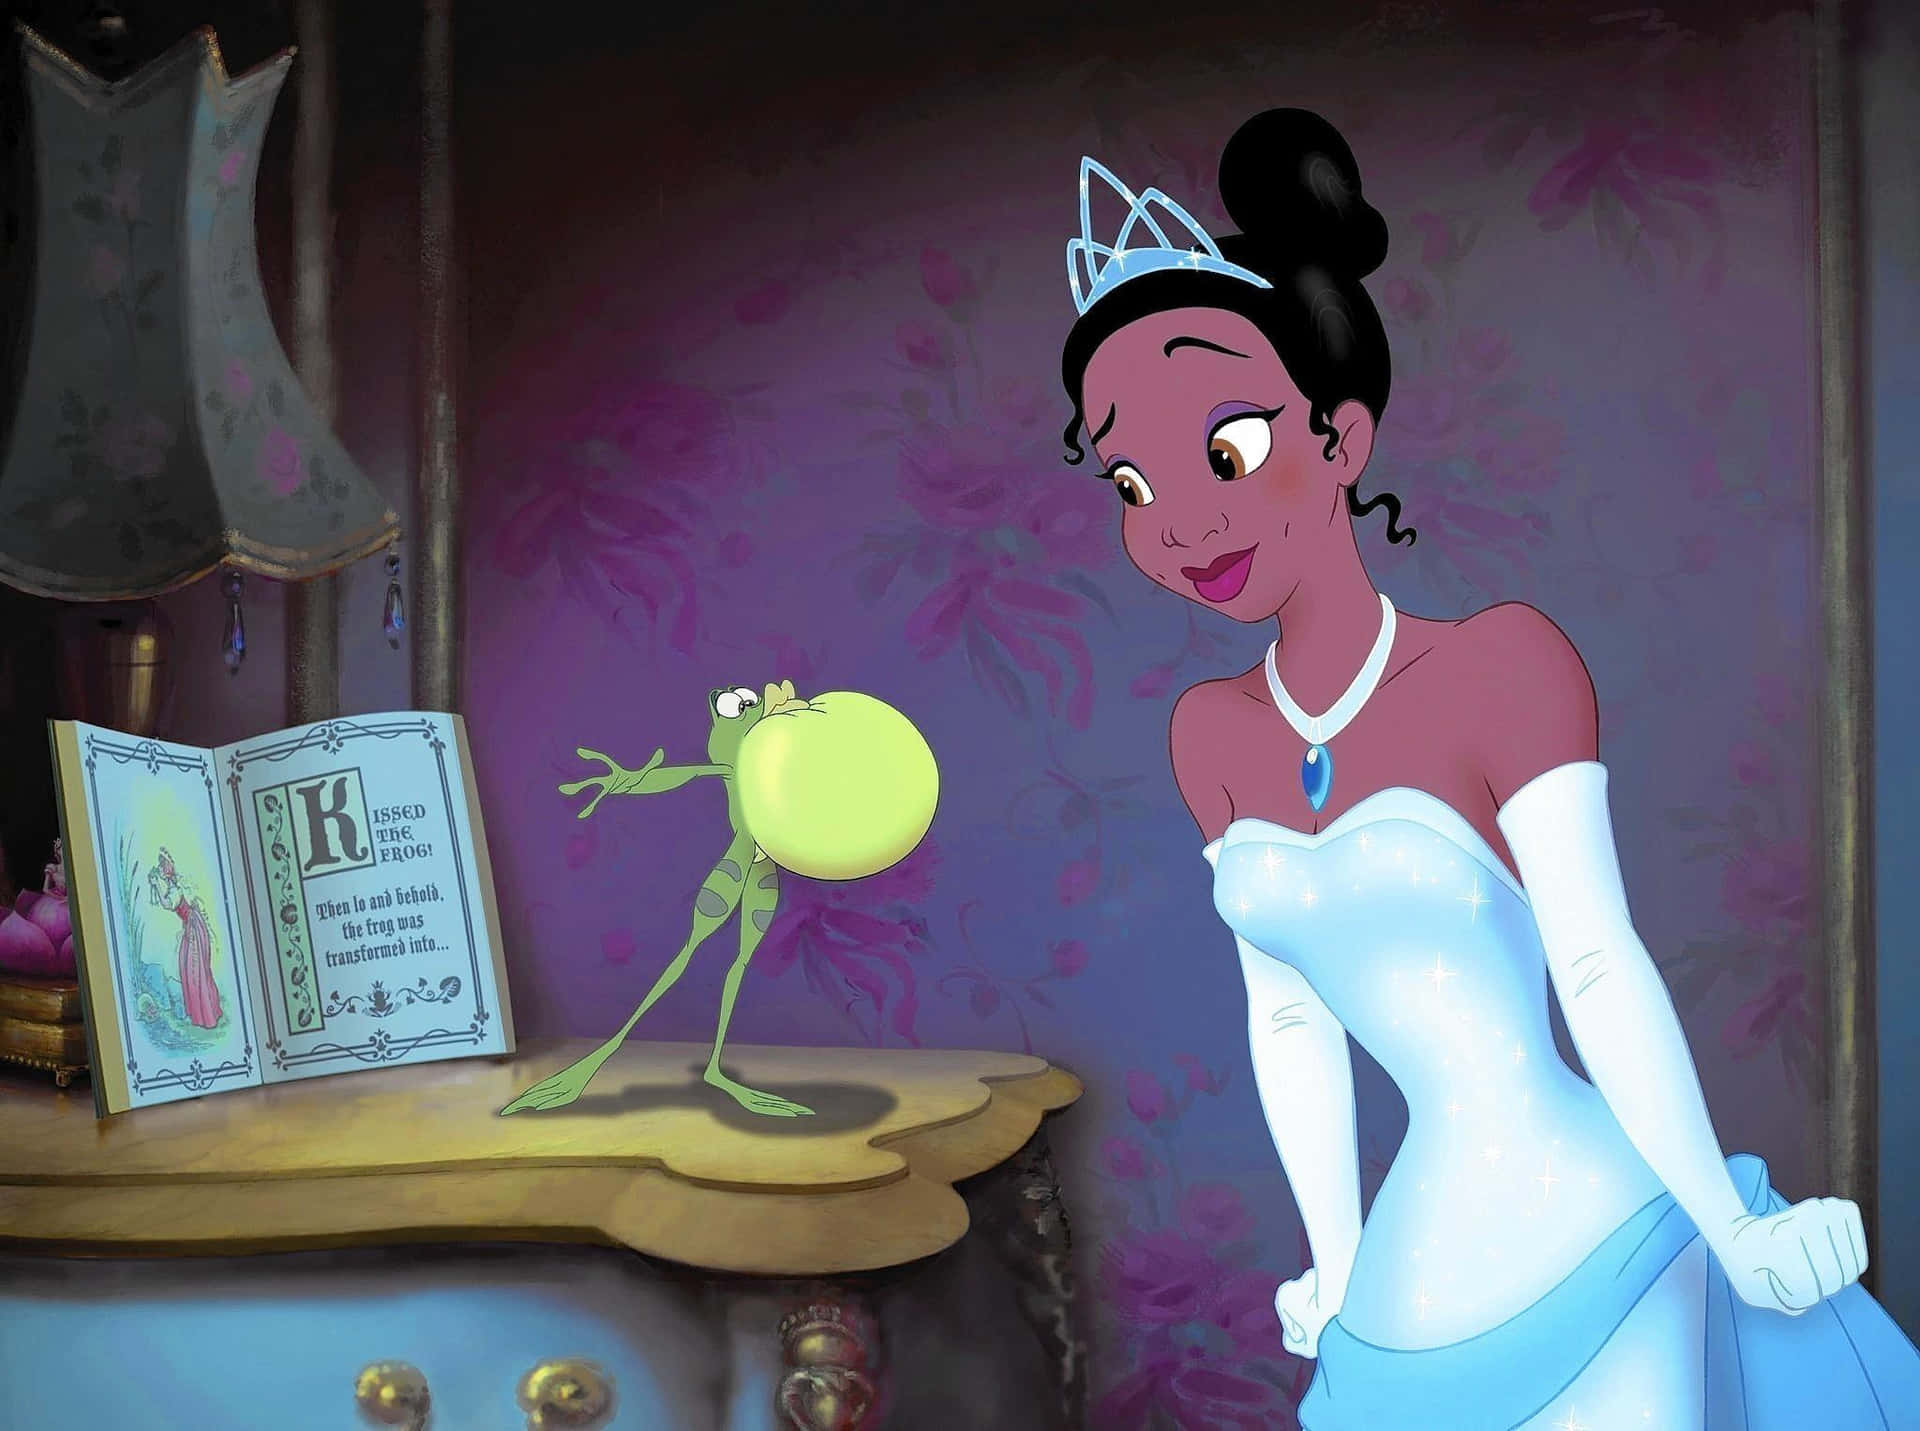 Princess Tiana of Disney's animated film The Princess and the Frog. Wallpaper